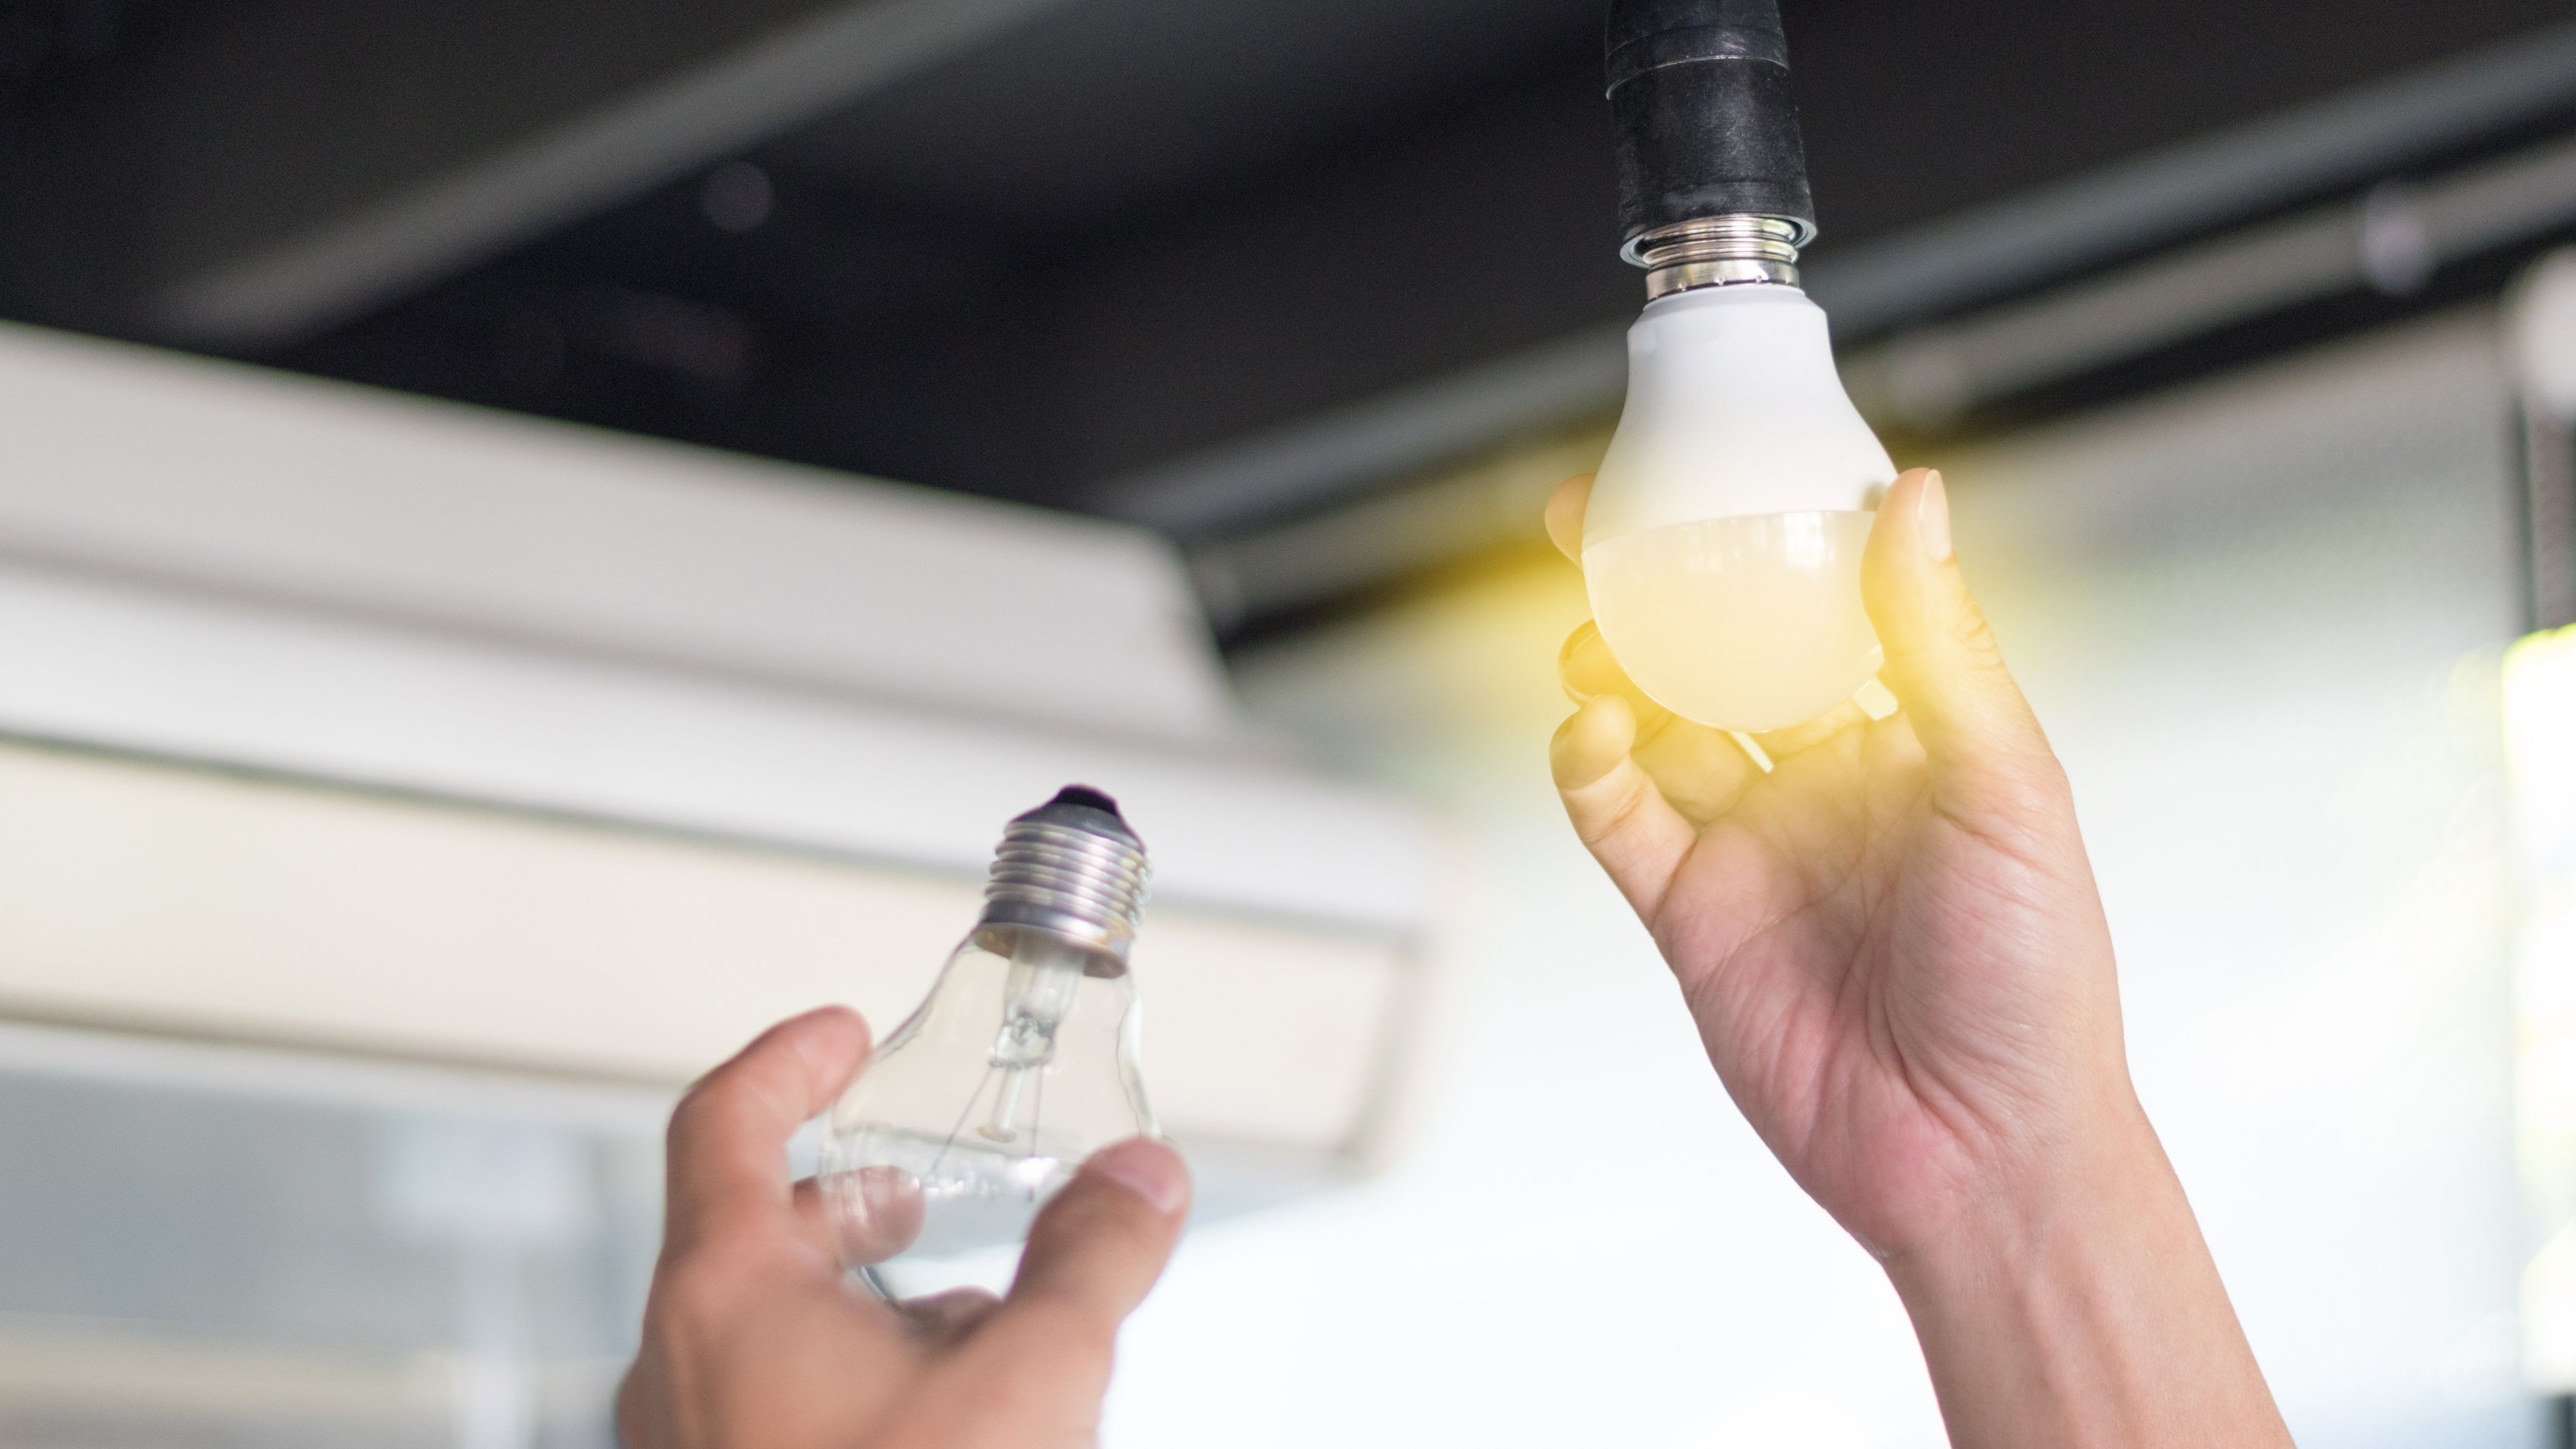 LED light bulb buying guide